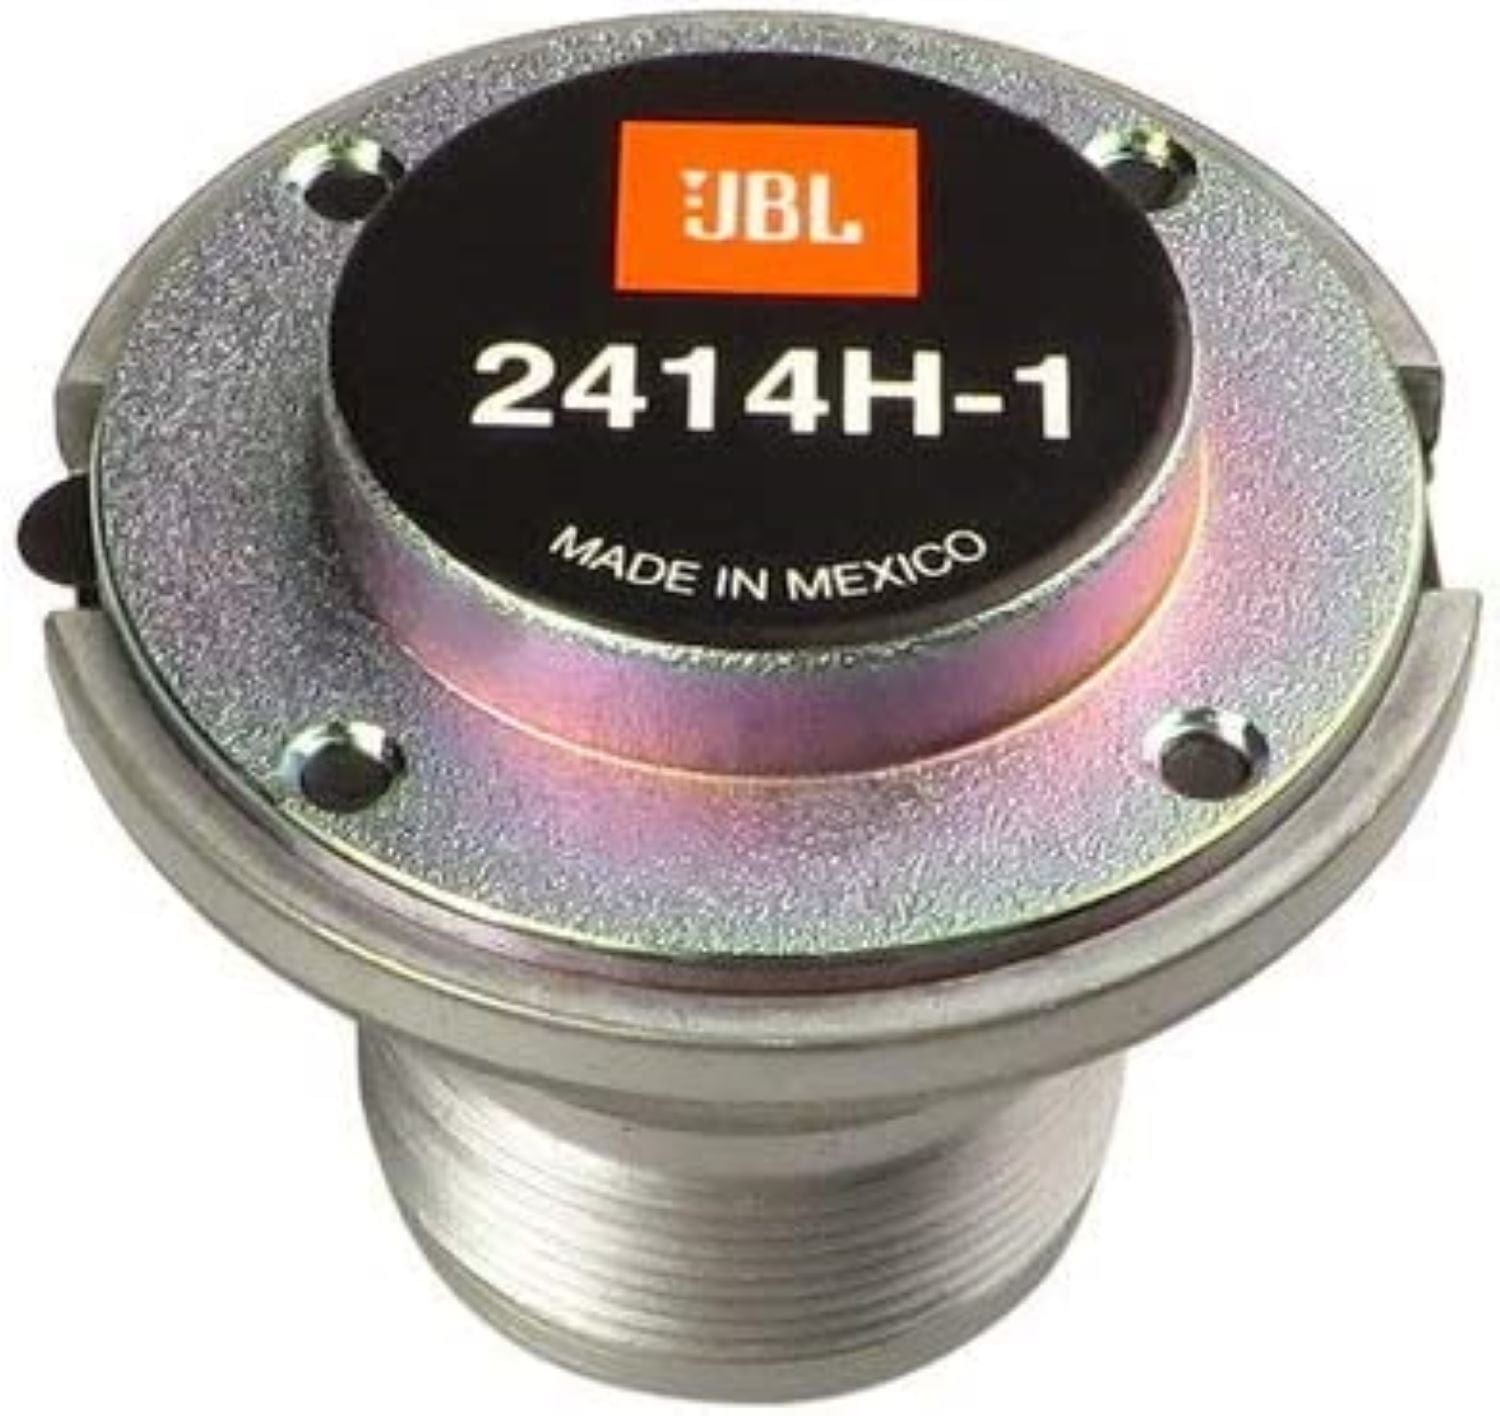 JBL 2414H-1 Replacement Tweeter for EON 300 Speaker